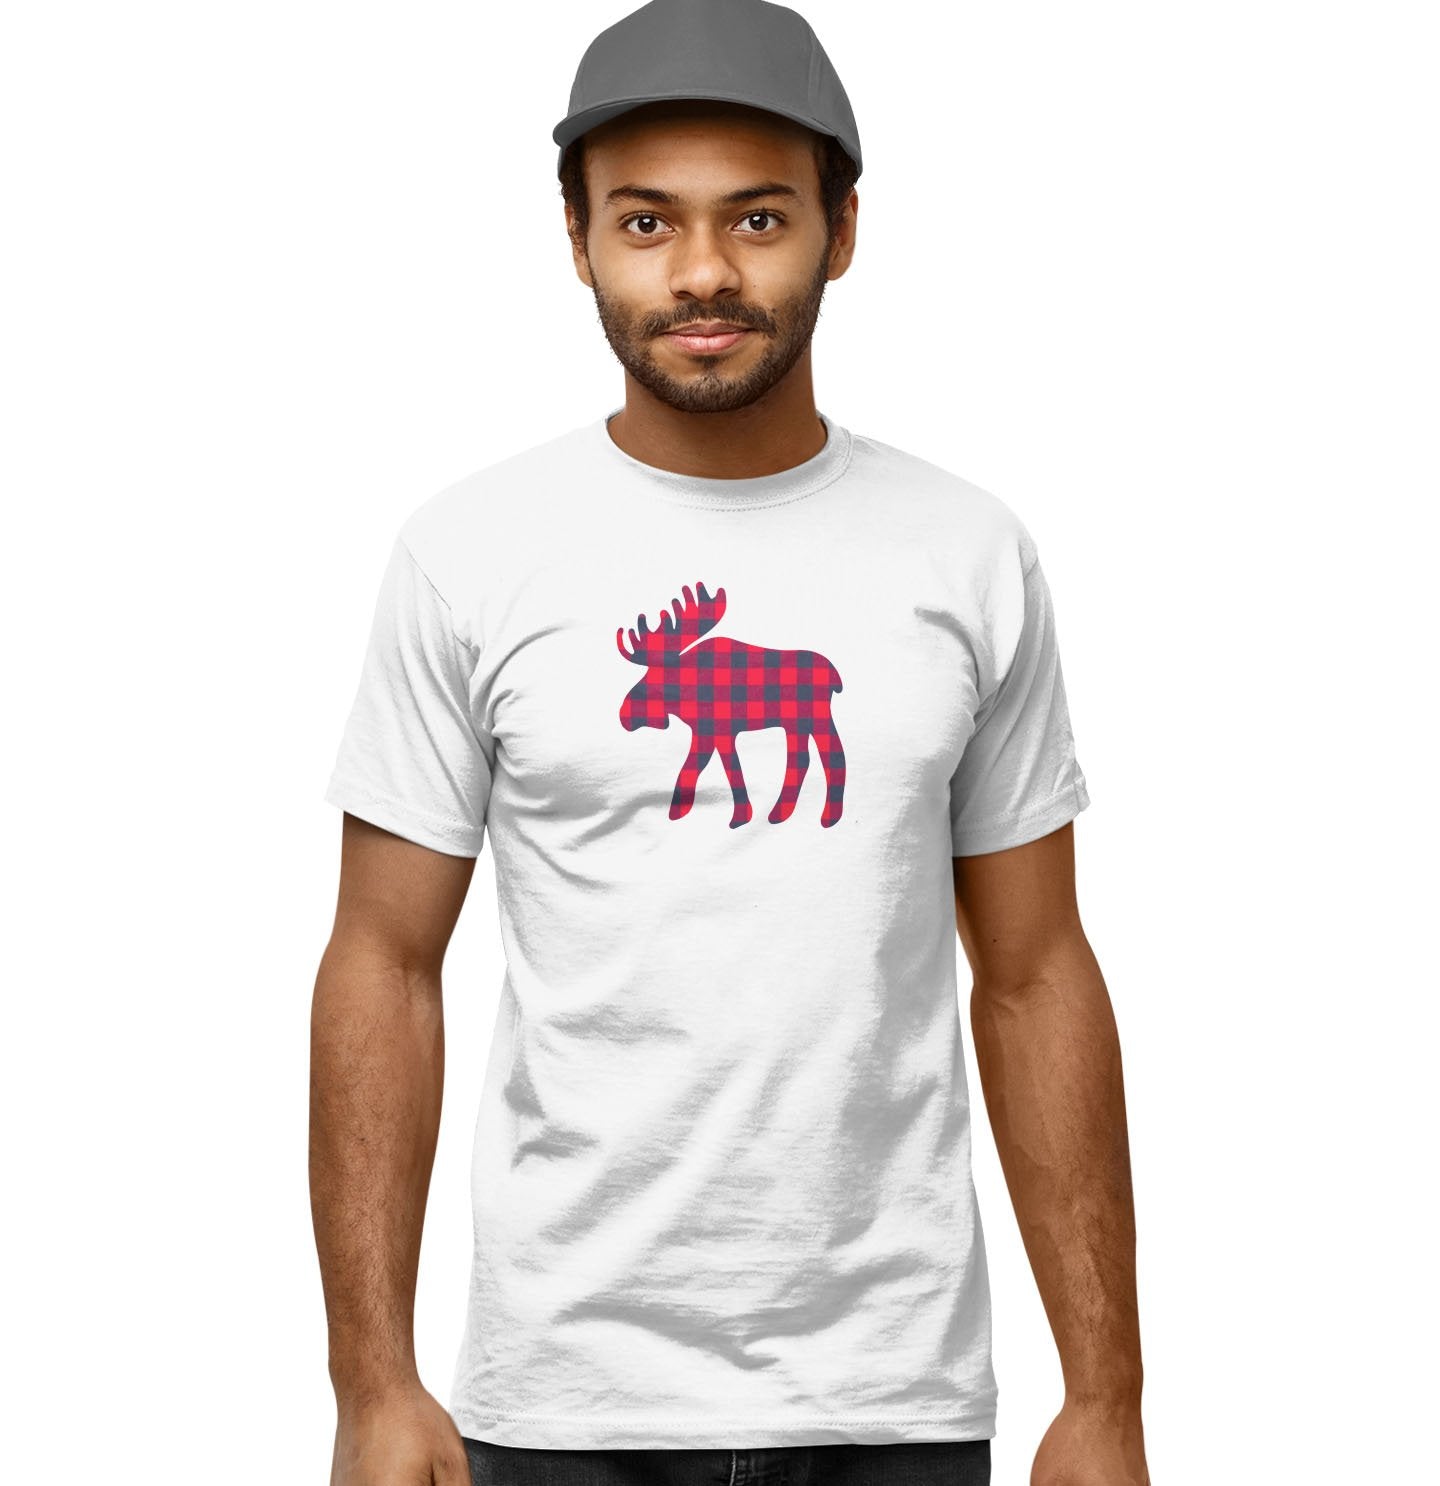 Plaid Moose - Adult Unisex T-Shirt